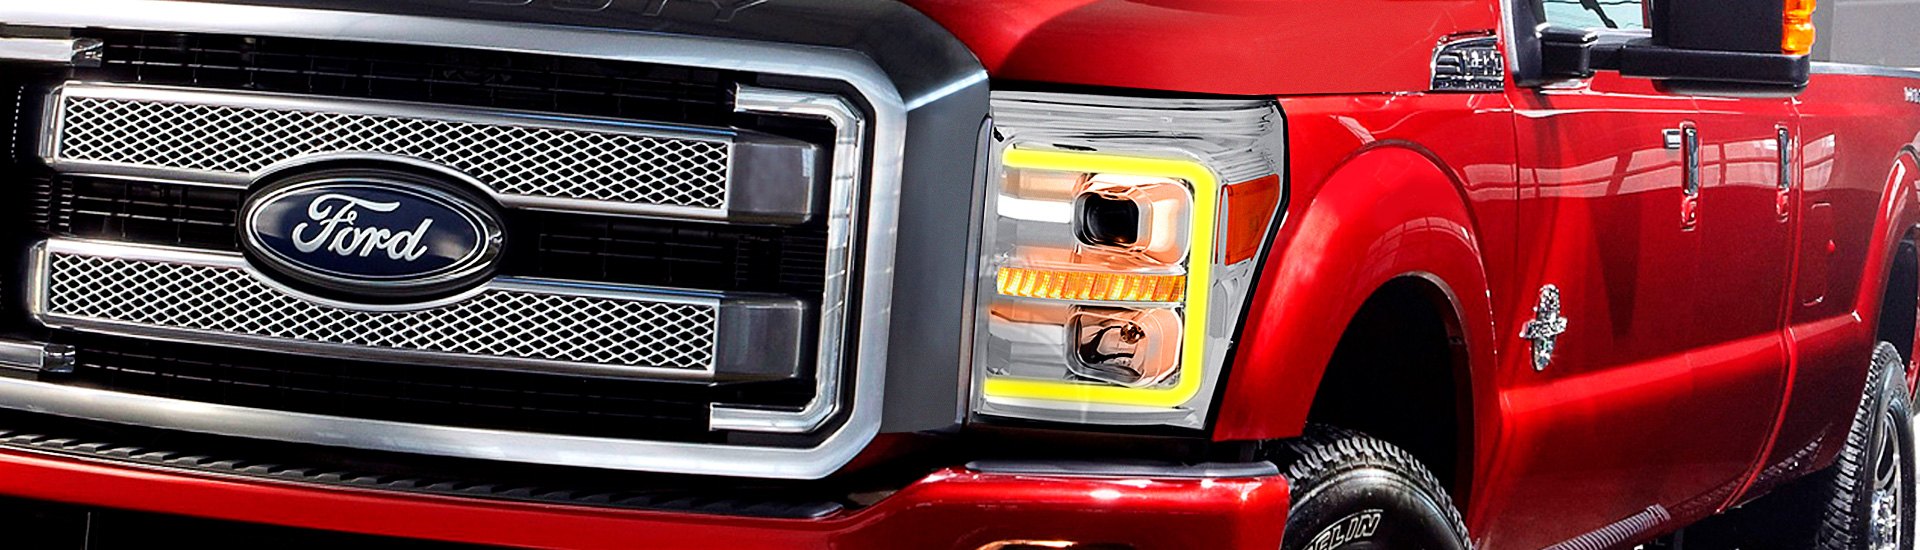 New Headlights with LED U-Bar Turn Signal for Ford Super Duty Trucks